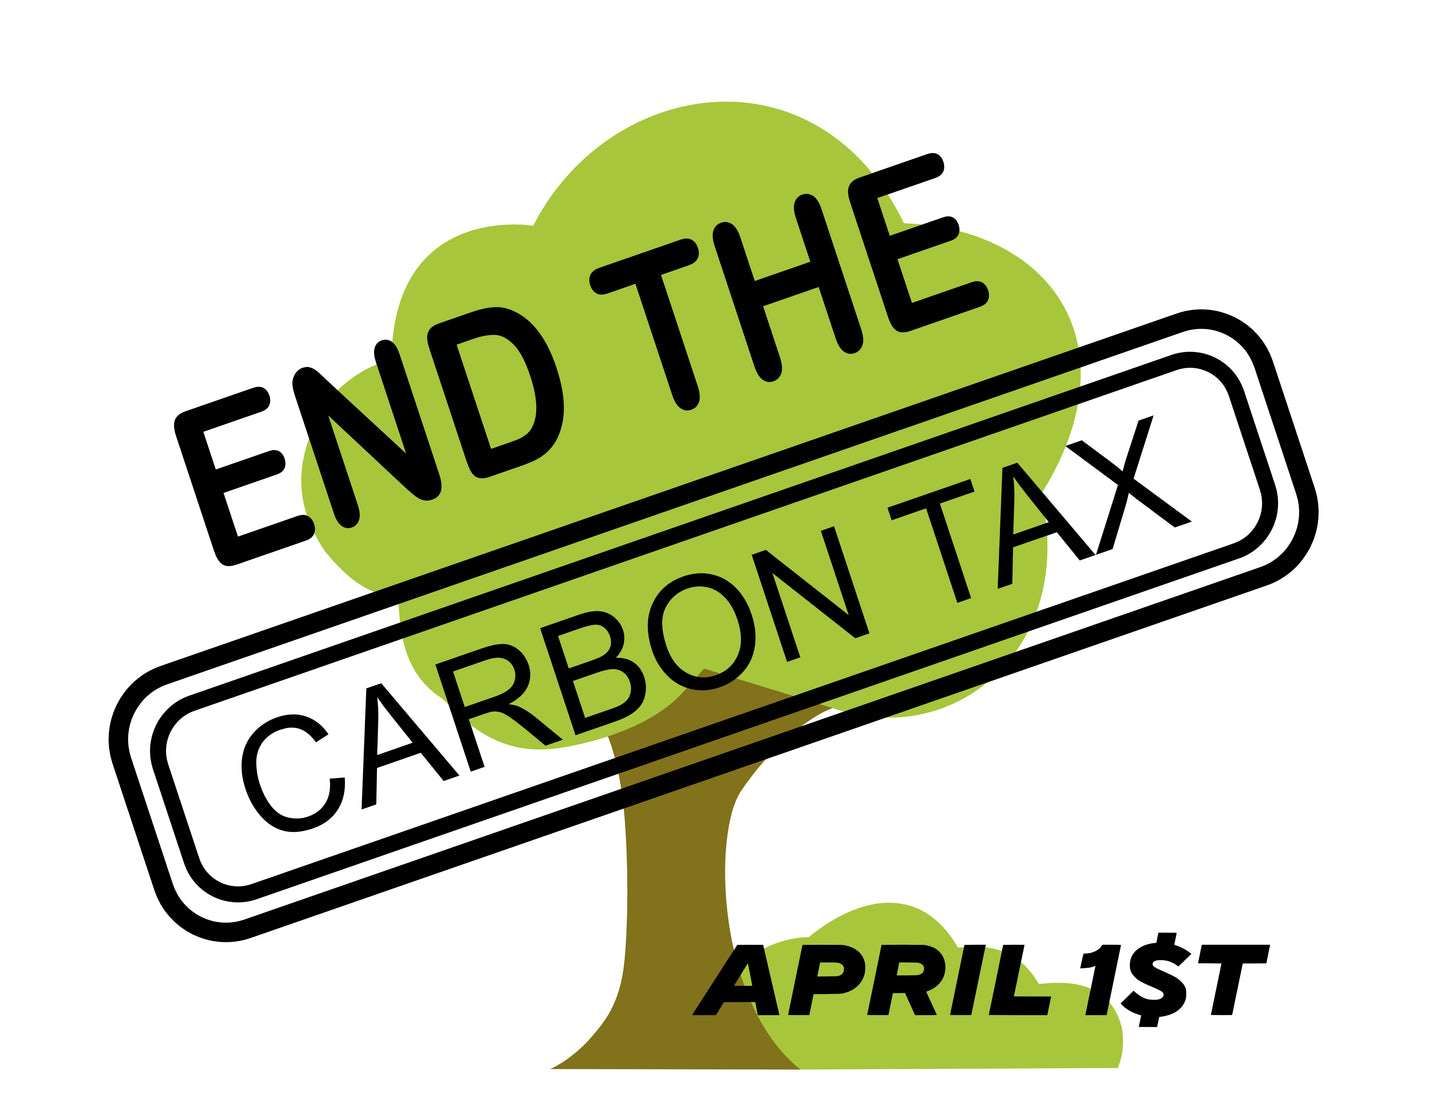 Carbon Tax Custom Artwork